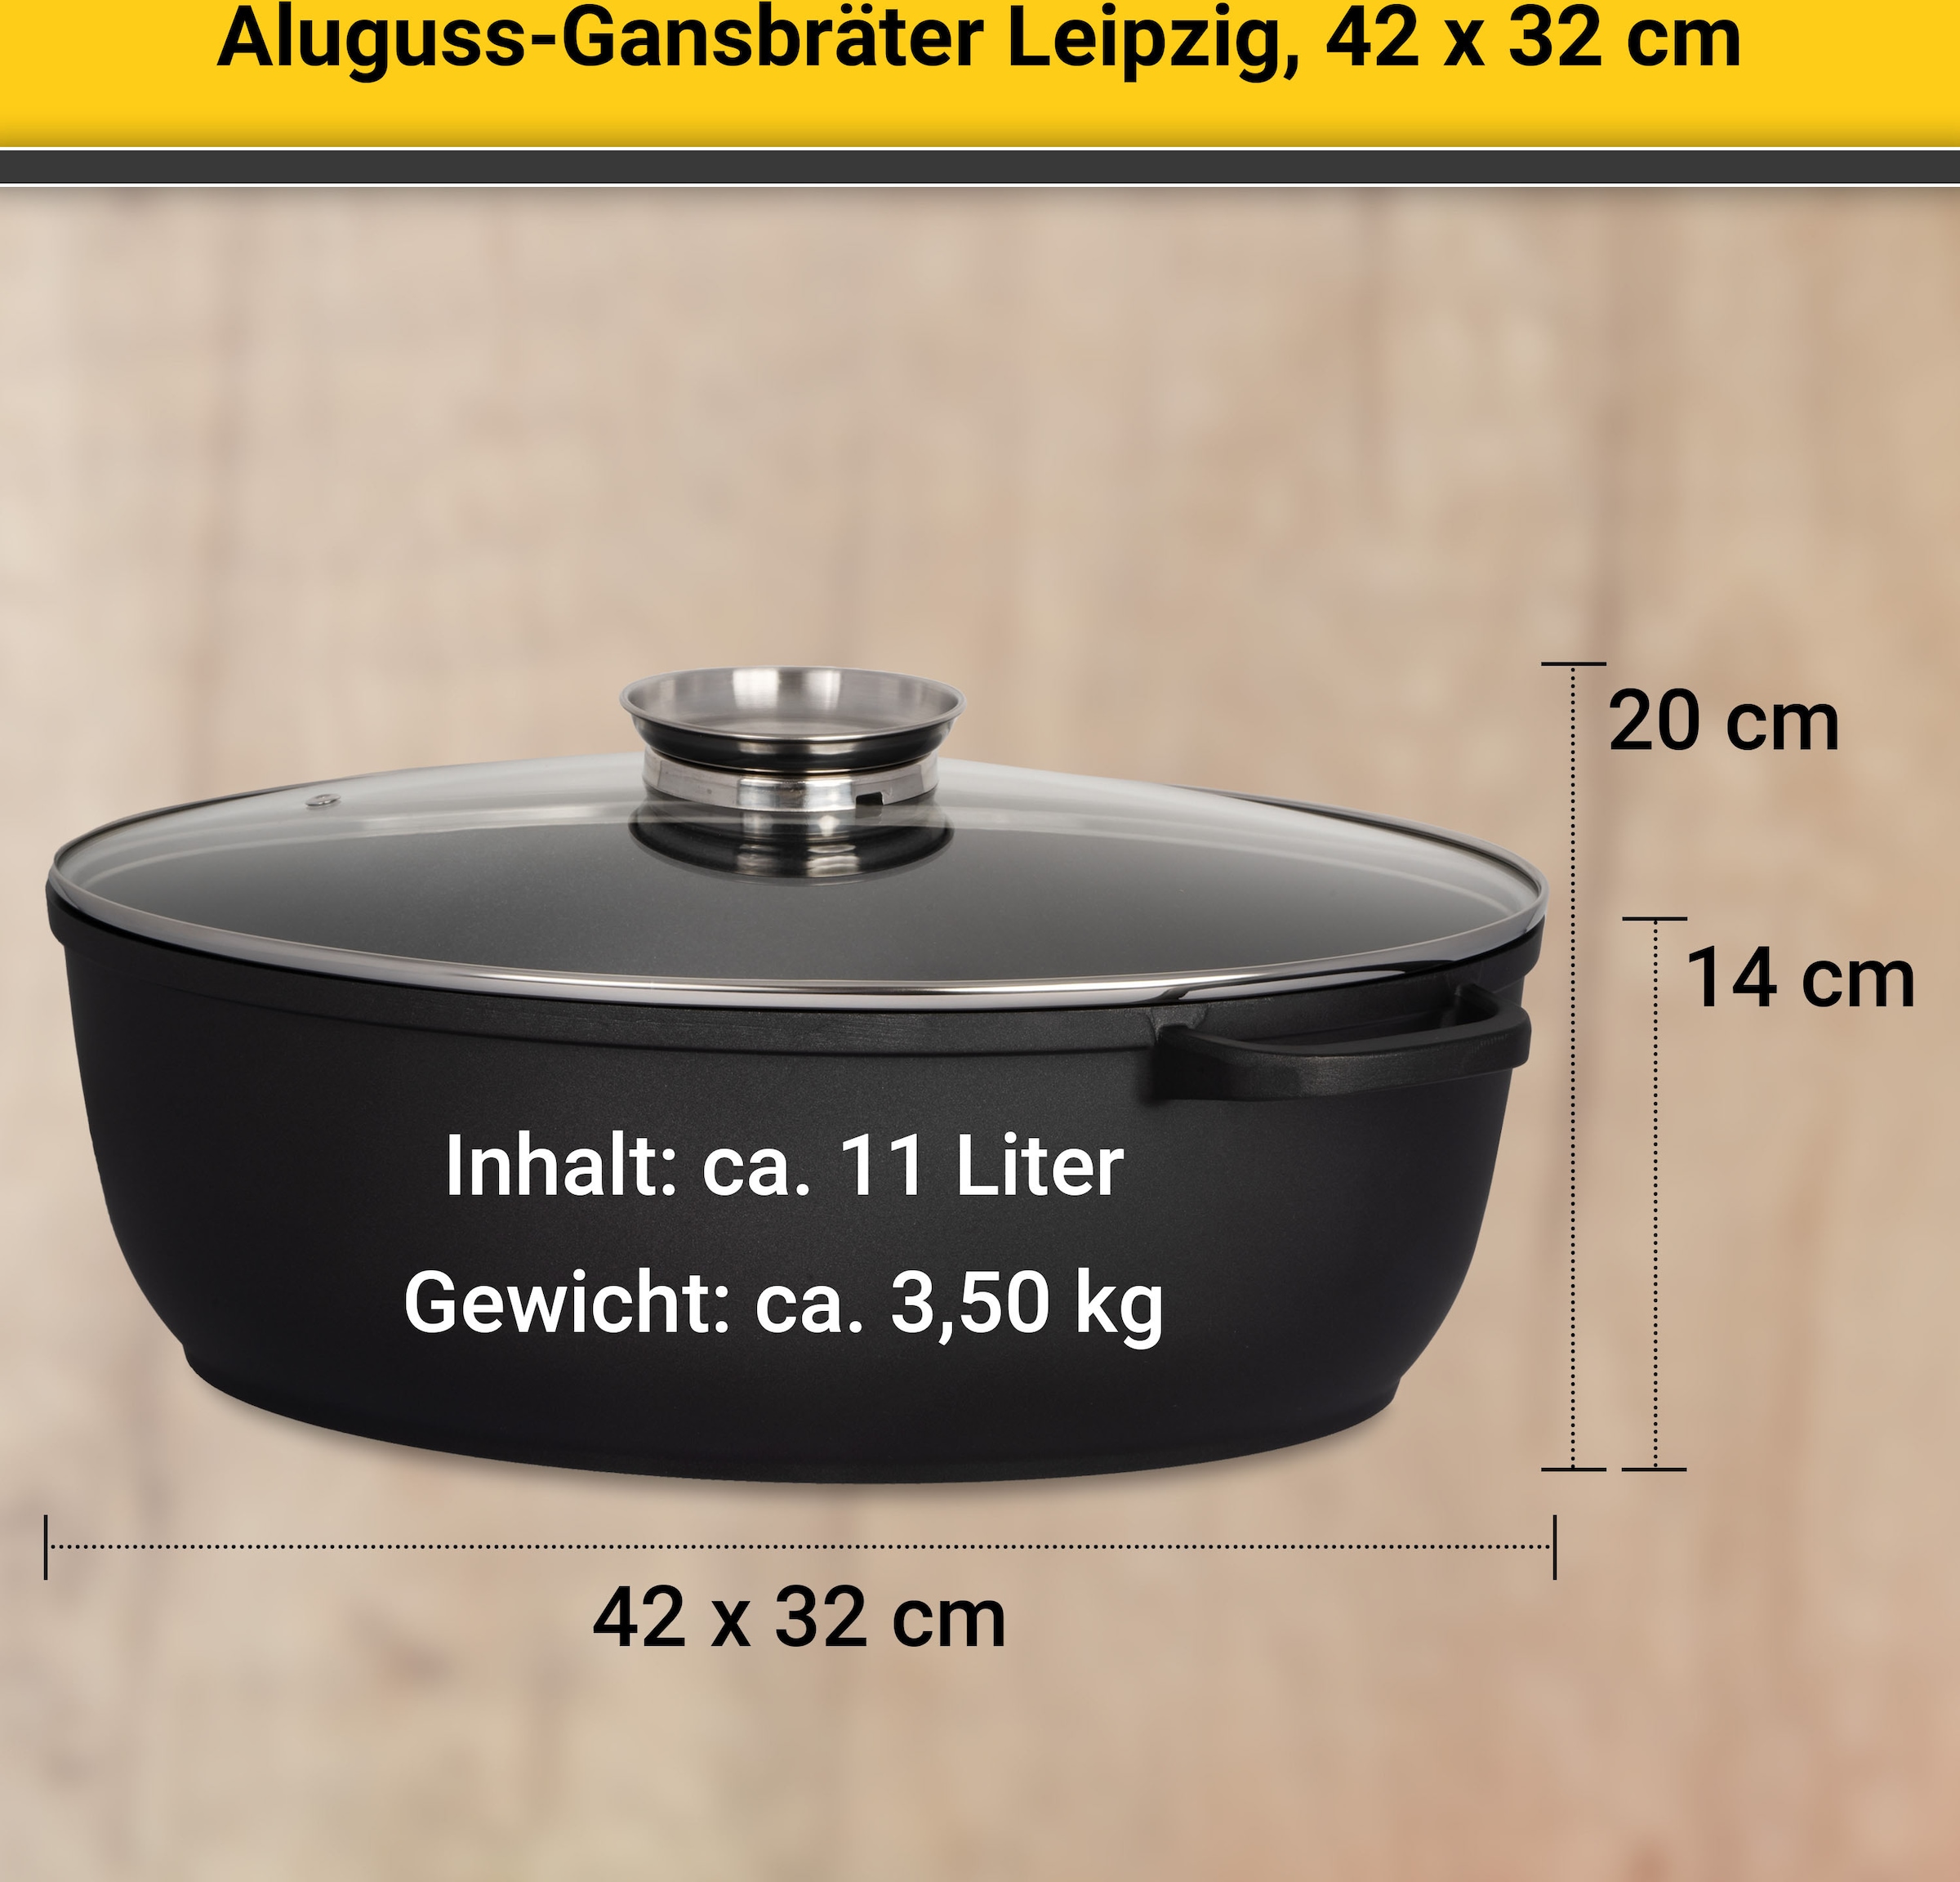 Krüger Bräter »Aluguss Gansbräter mit Glasdeckel und Aromaknopf LEIPZIG, 42x32x14 cm«, Aluminiumguss, (1 tlg.), hochwertige Antihaft-Versiegelung